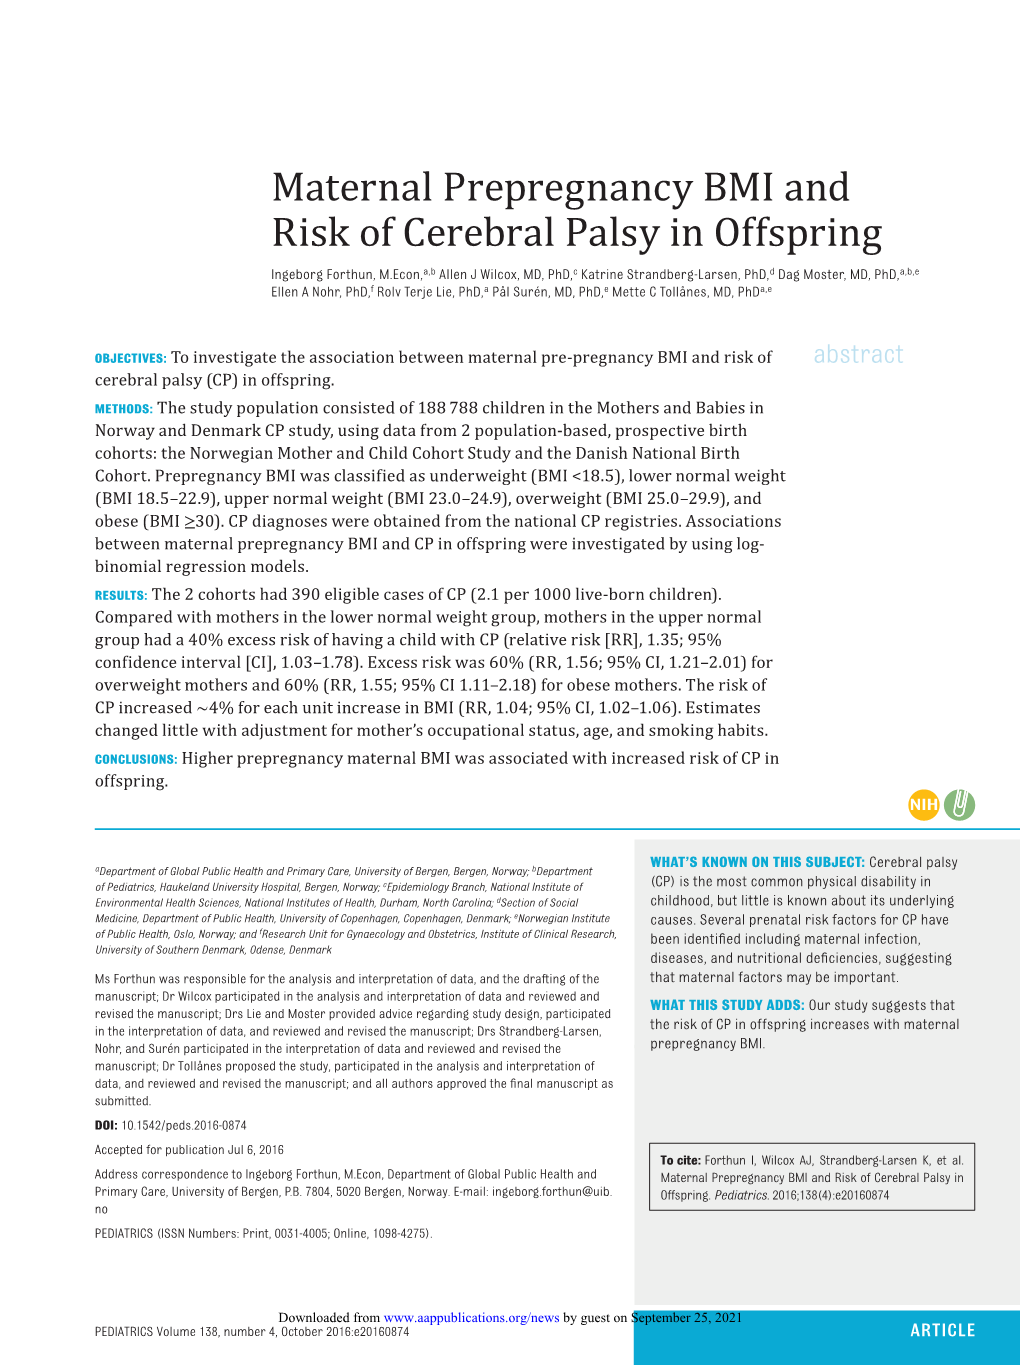 Maternal Prepregnancy BMI and Risk of Cerebral Palsy in Offspring